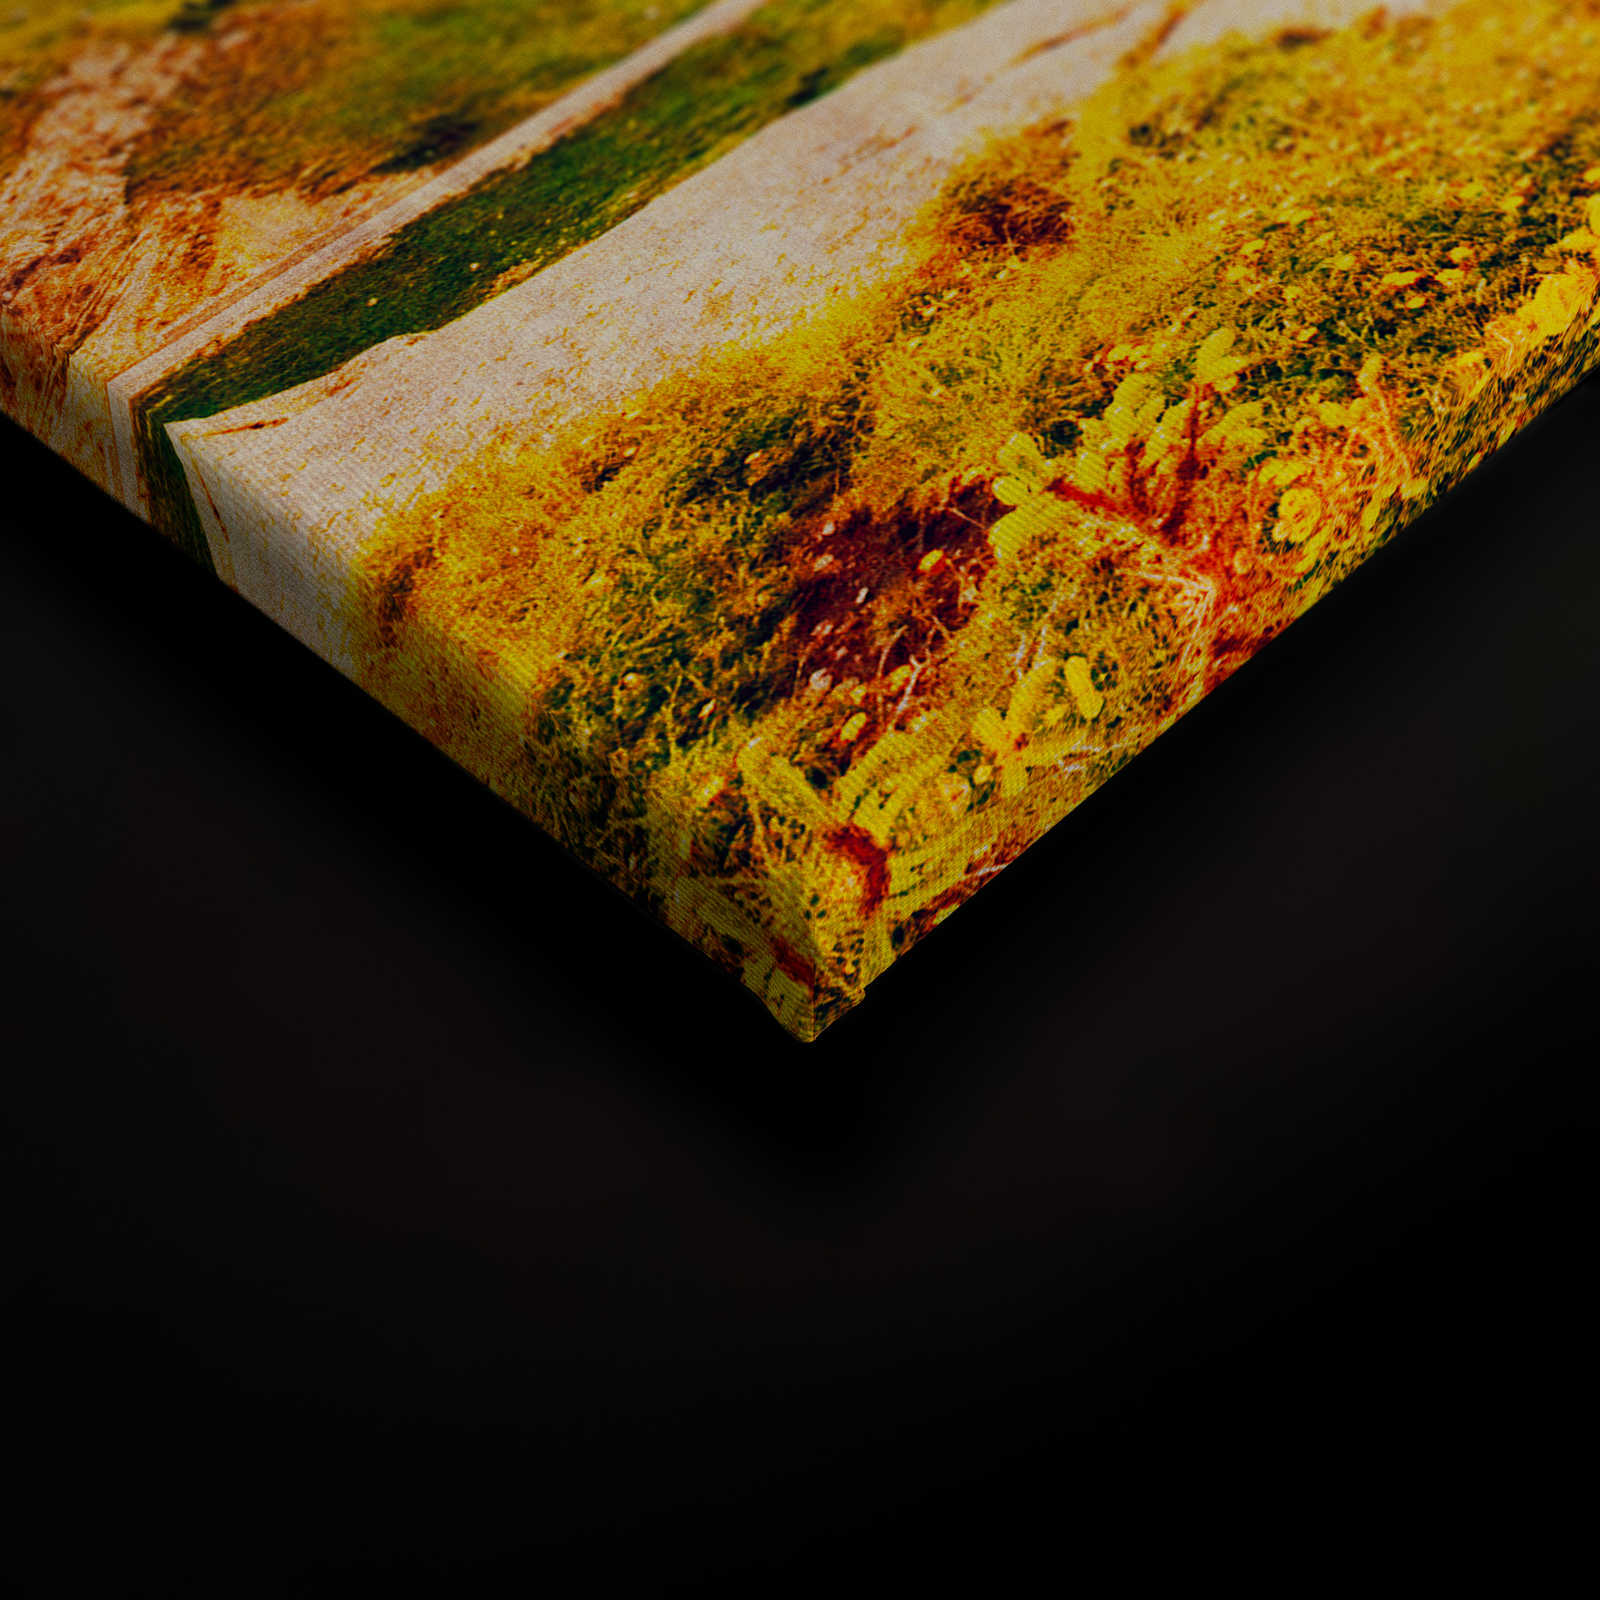             Dolomiti 1 - Quadro su tela Dolomiti Fotografia Retrò - Carta assorbente - 0,90 m x 0,60 m
        